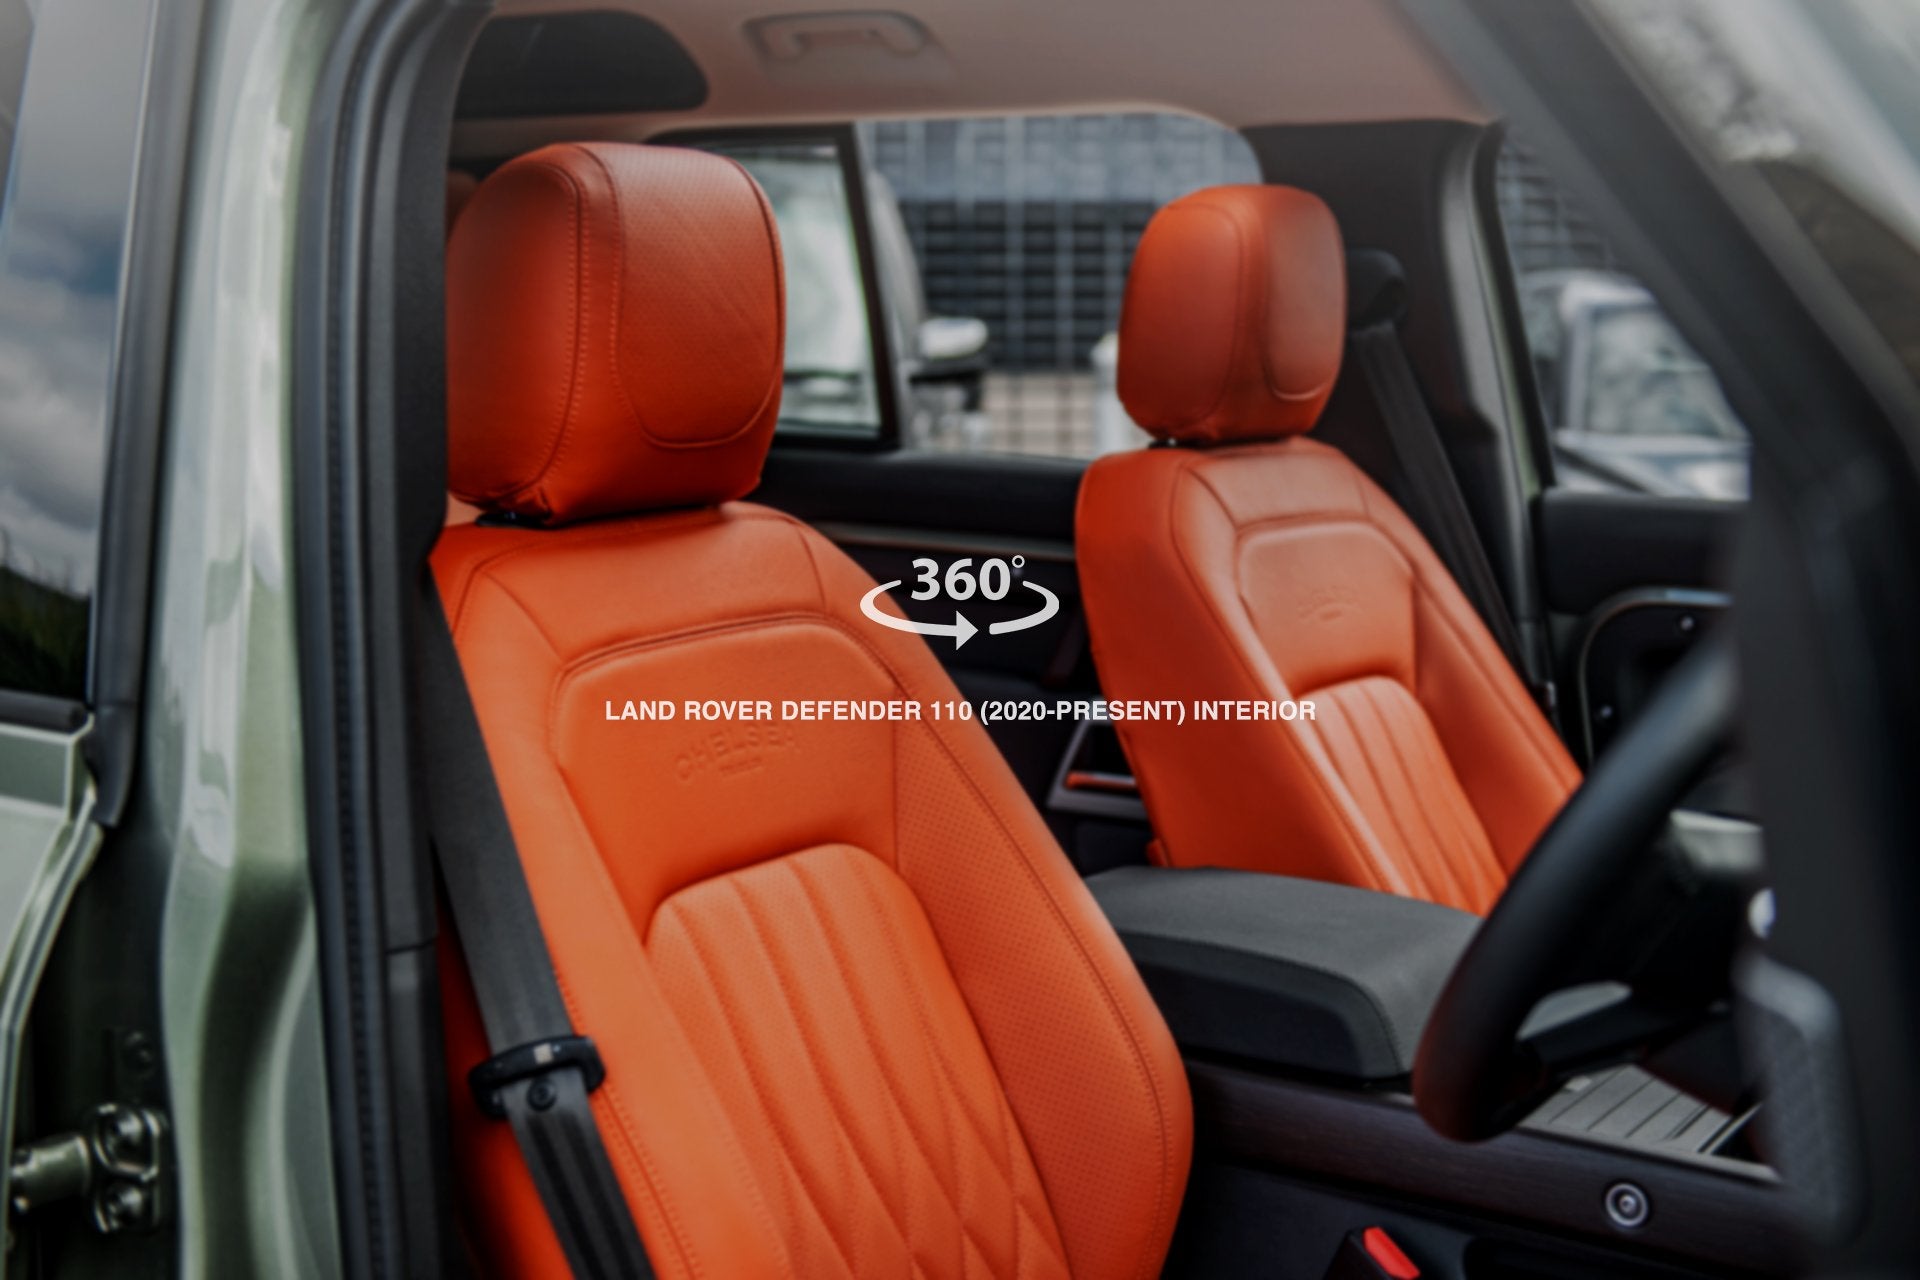 Land Rover Defender 110 (2020-Present) 5 Seats Comfort Leather Interior 360° Tour